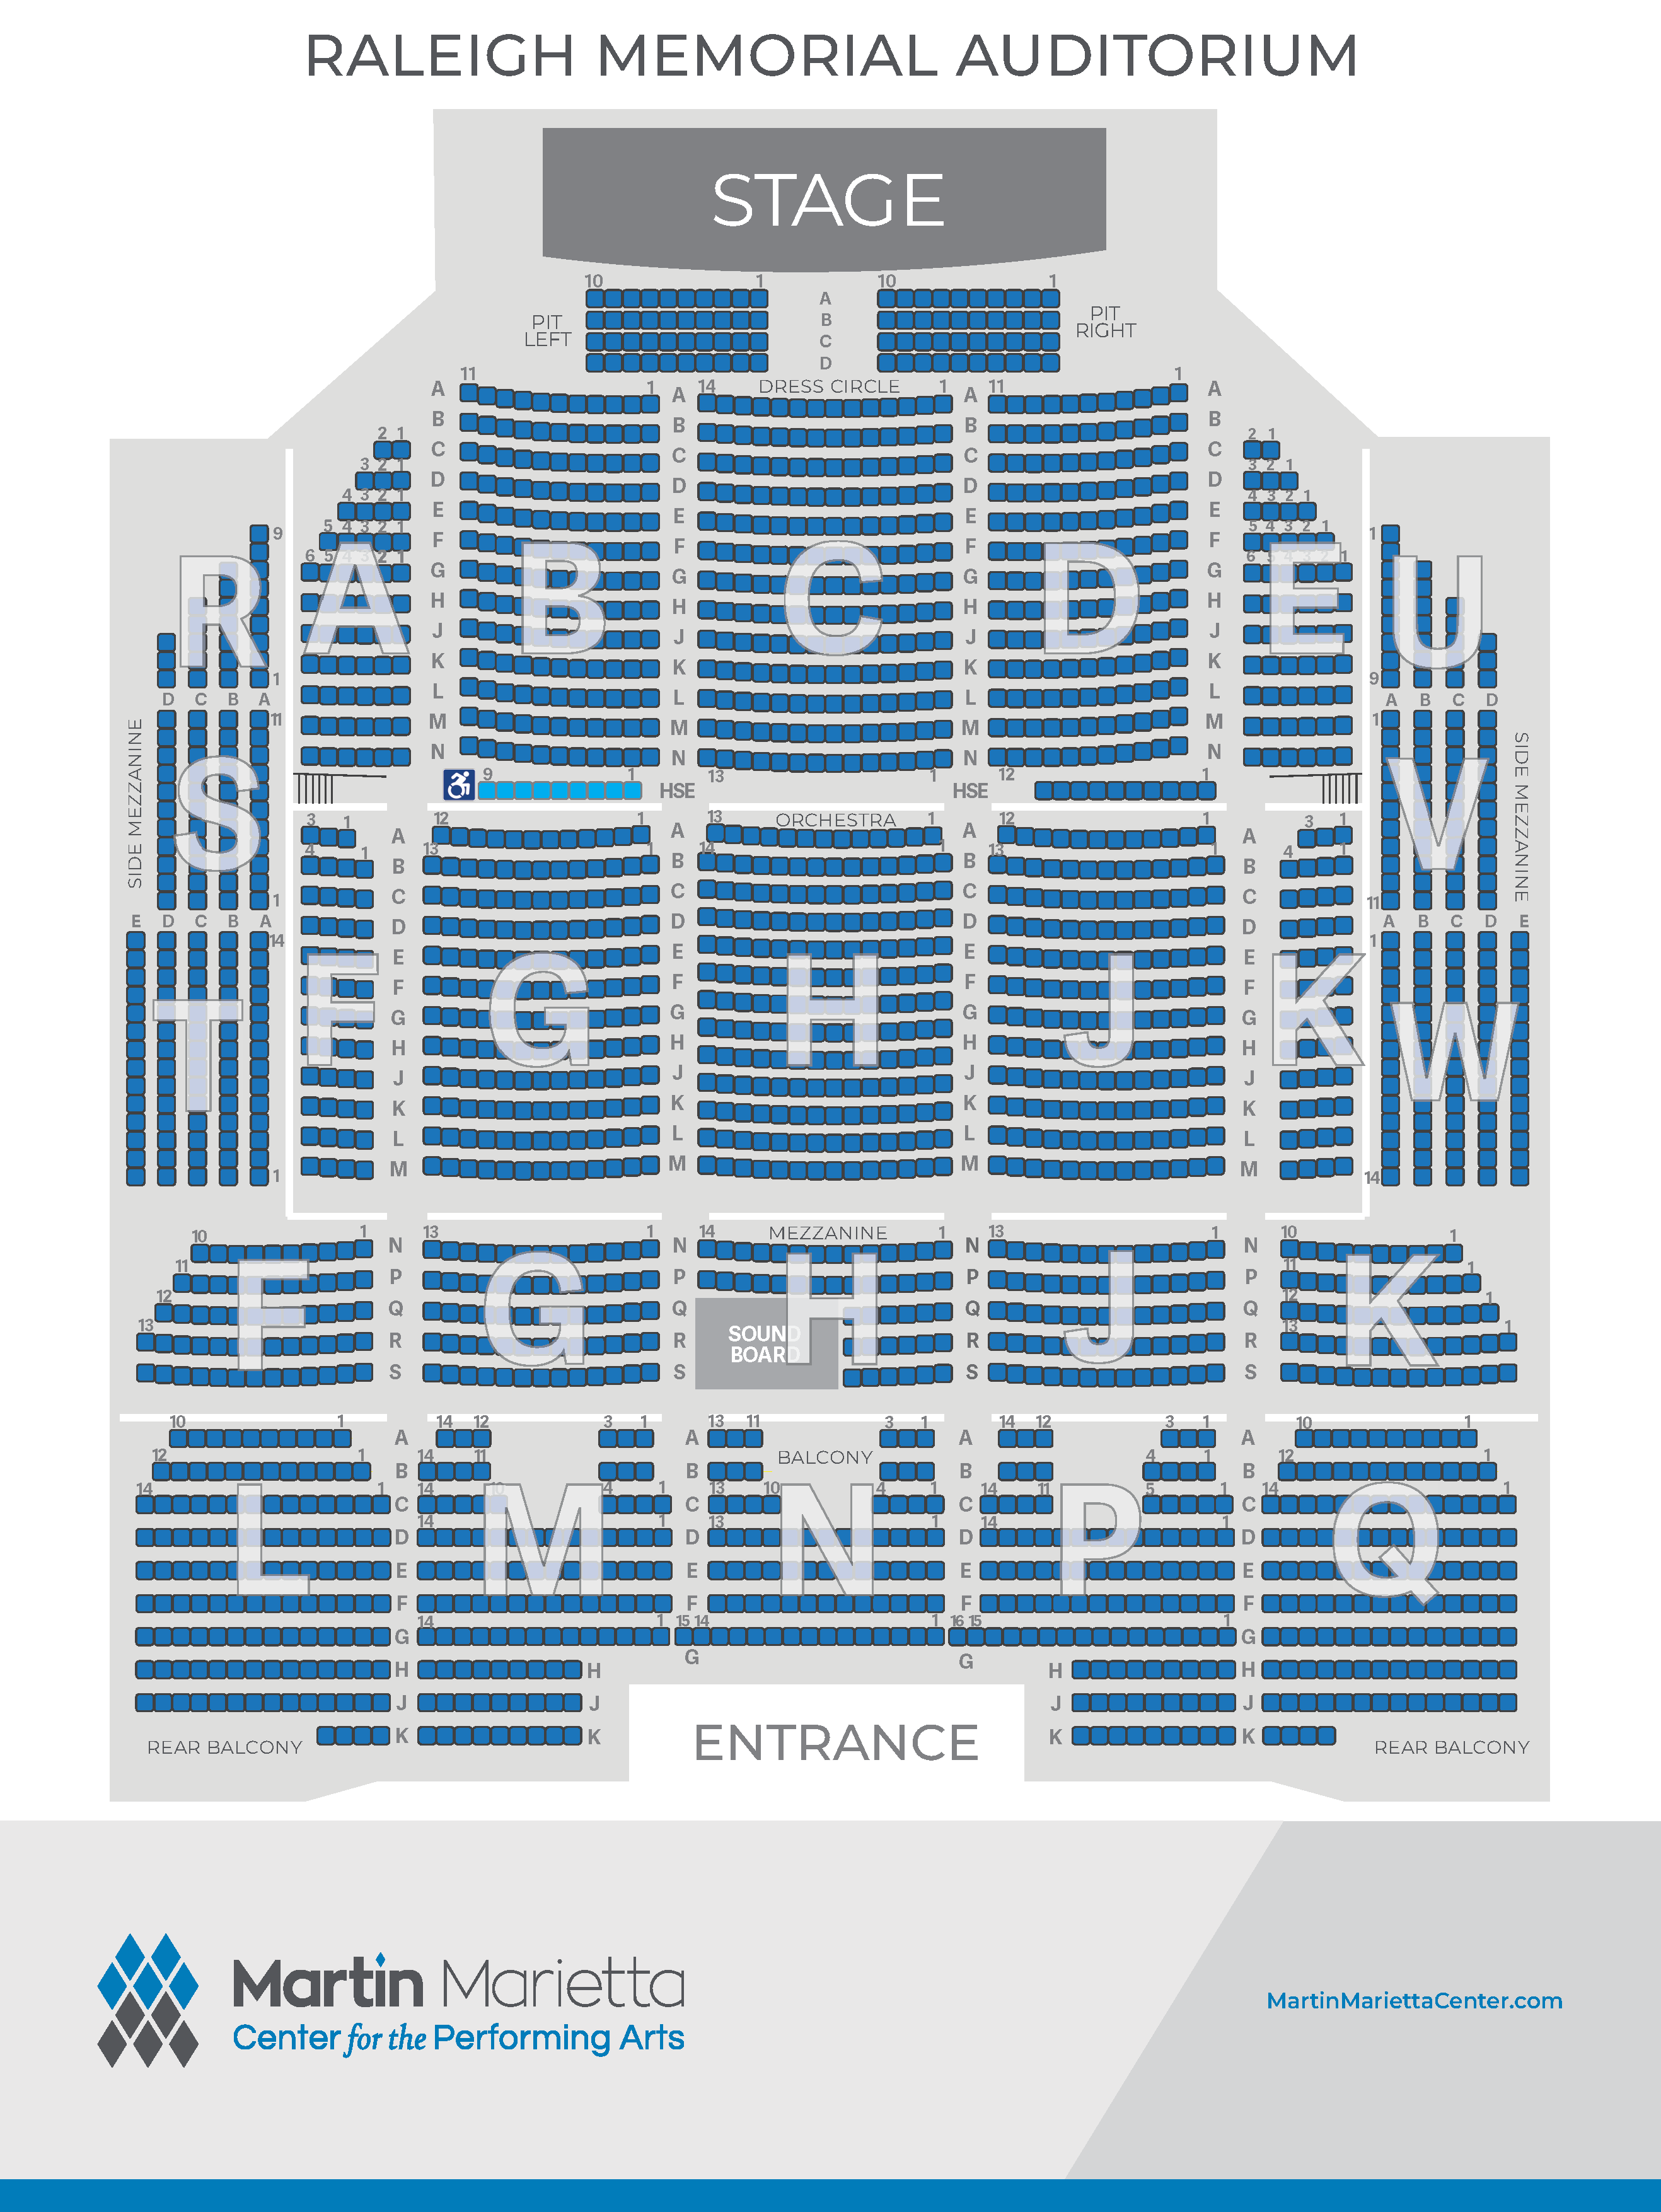 Raleigh Memorial Auditorium seating chart